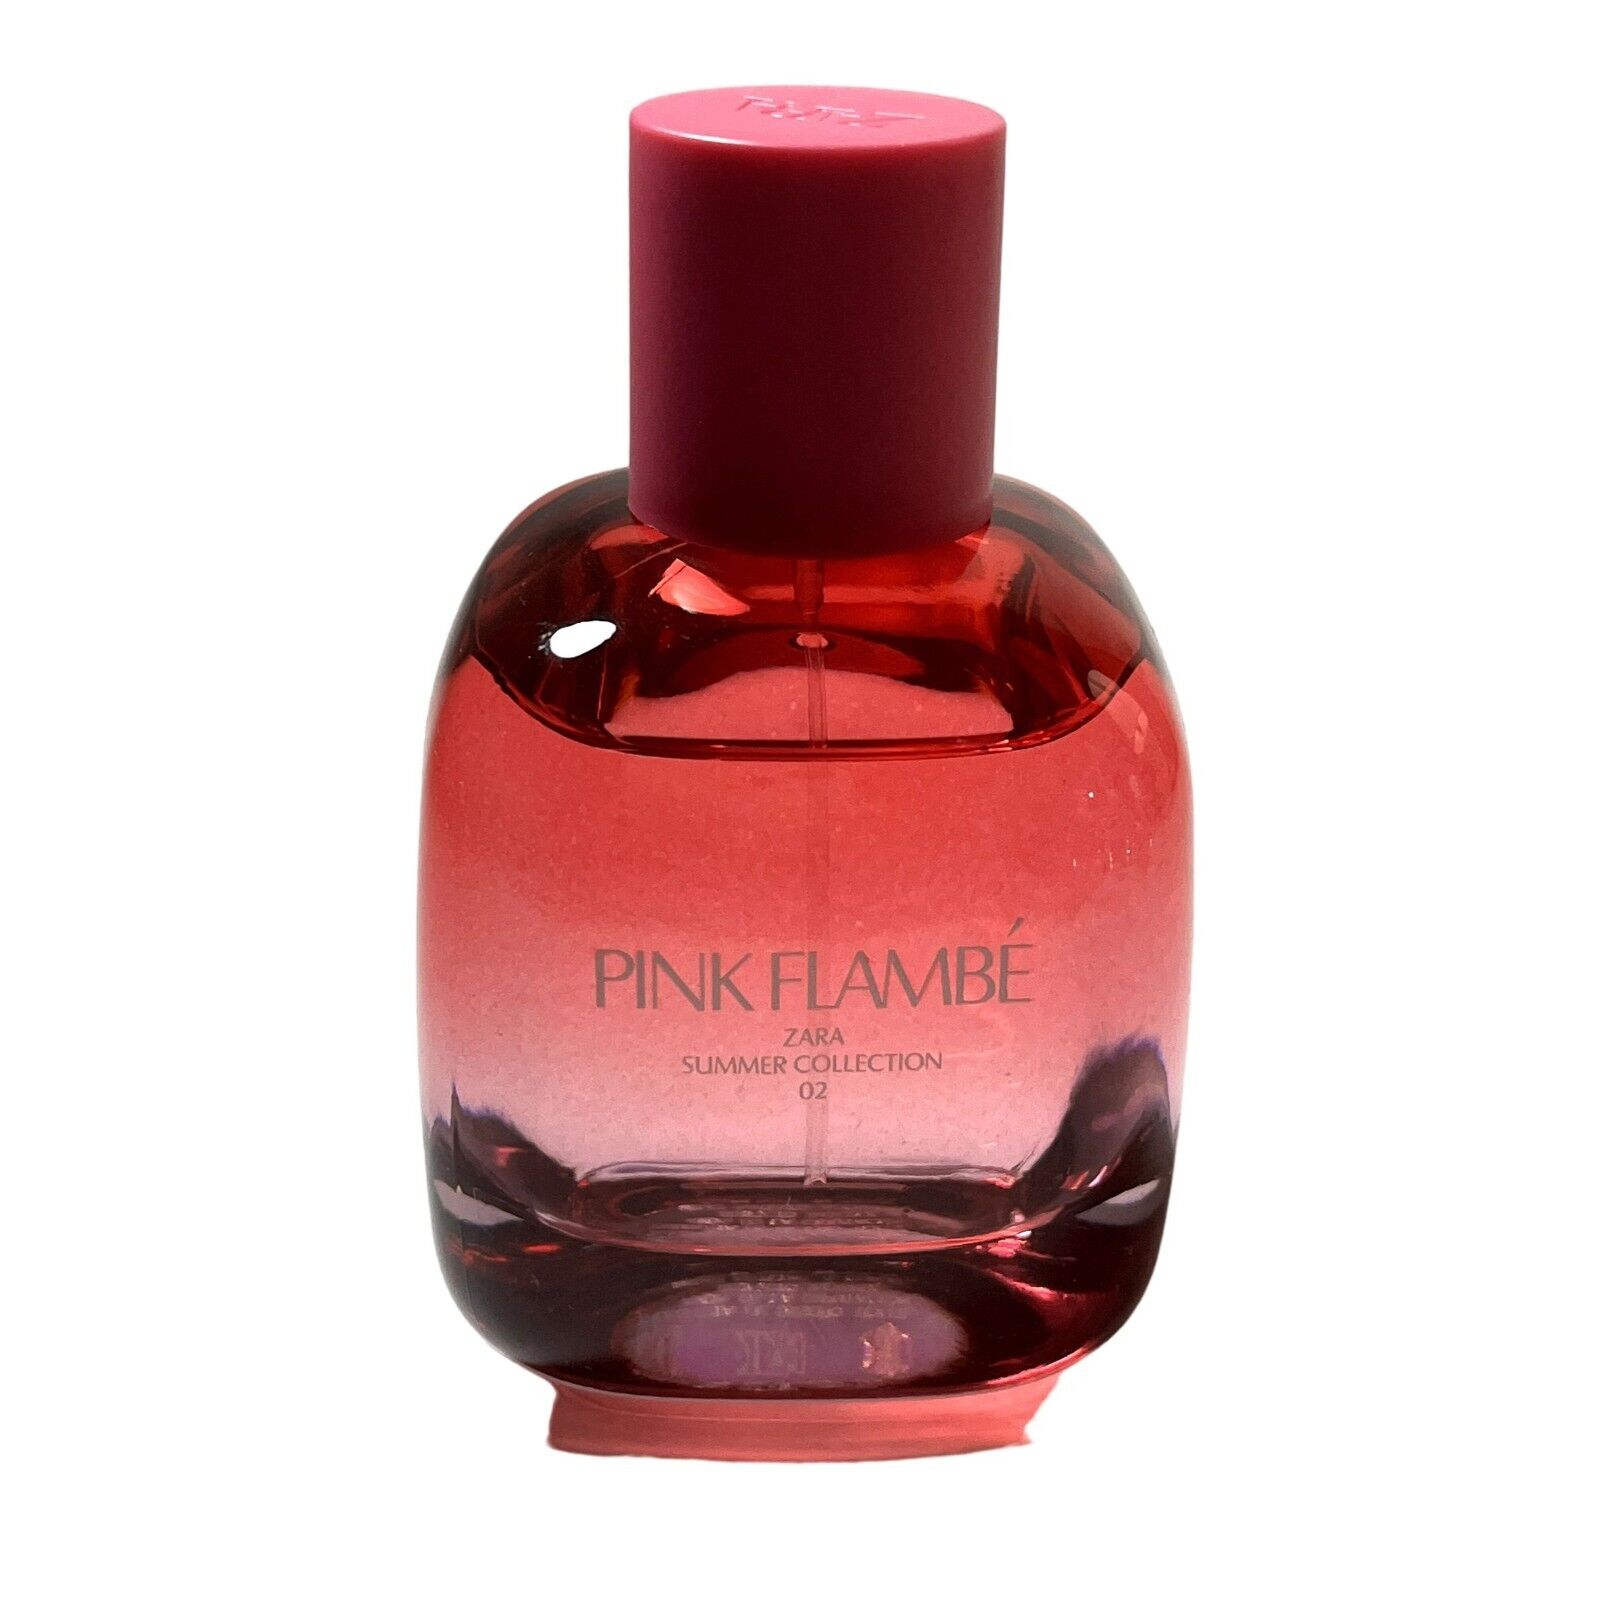 ZARA Pink Flambe Eau De Toilette Perfume Almost Full 3oz READ